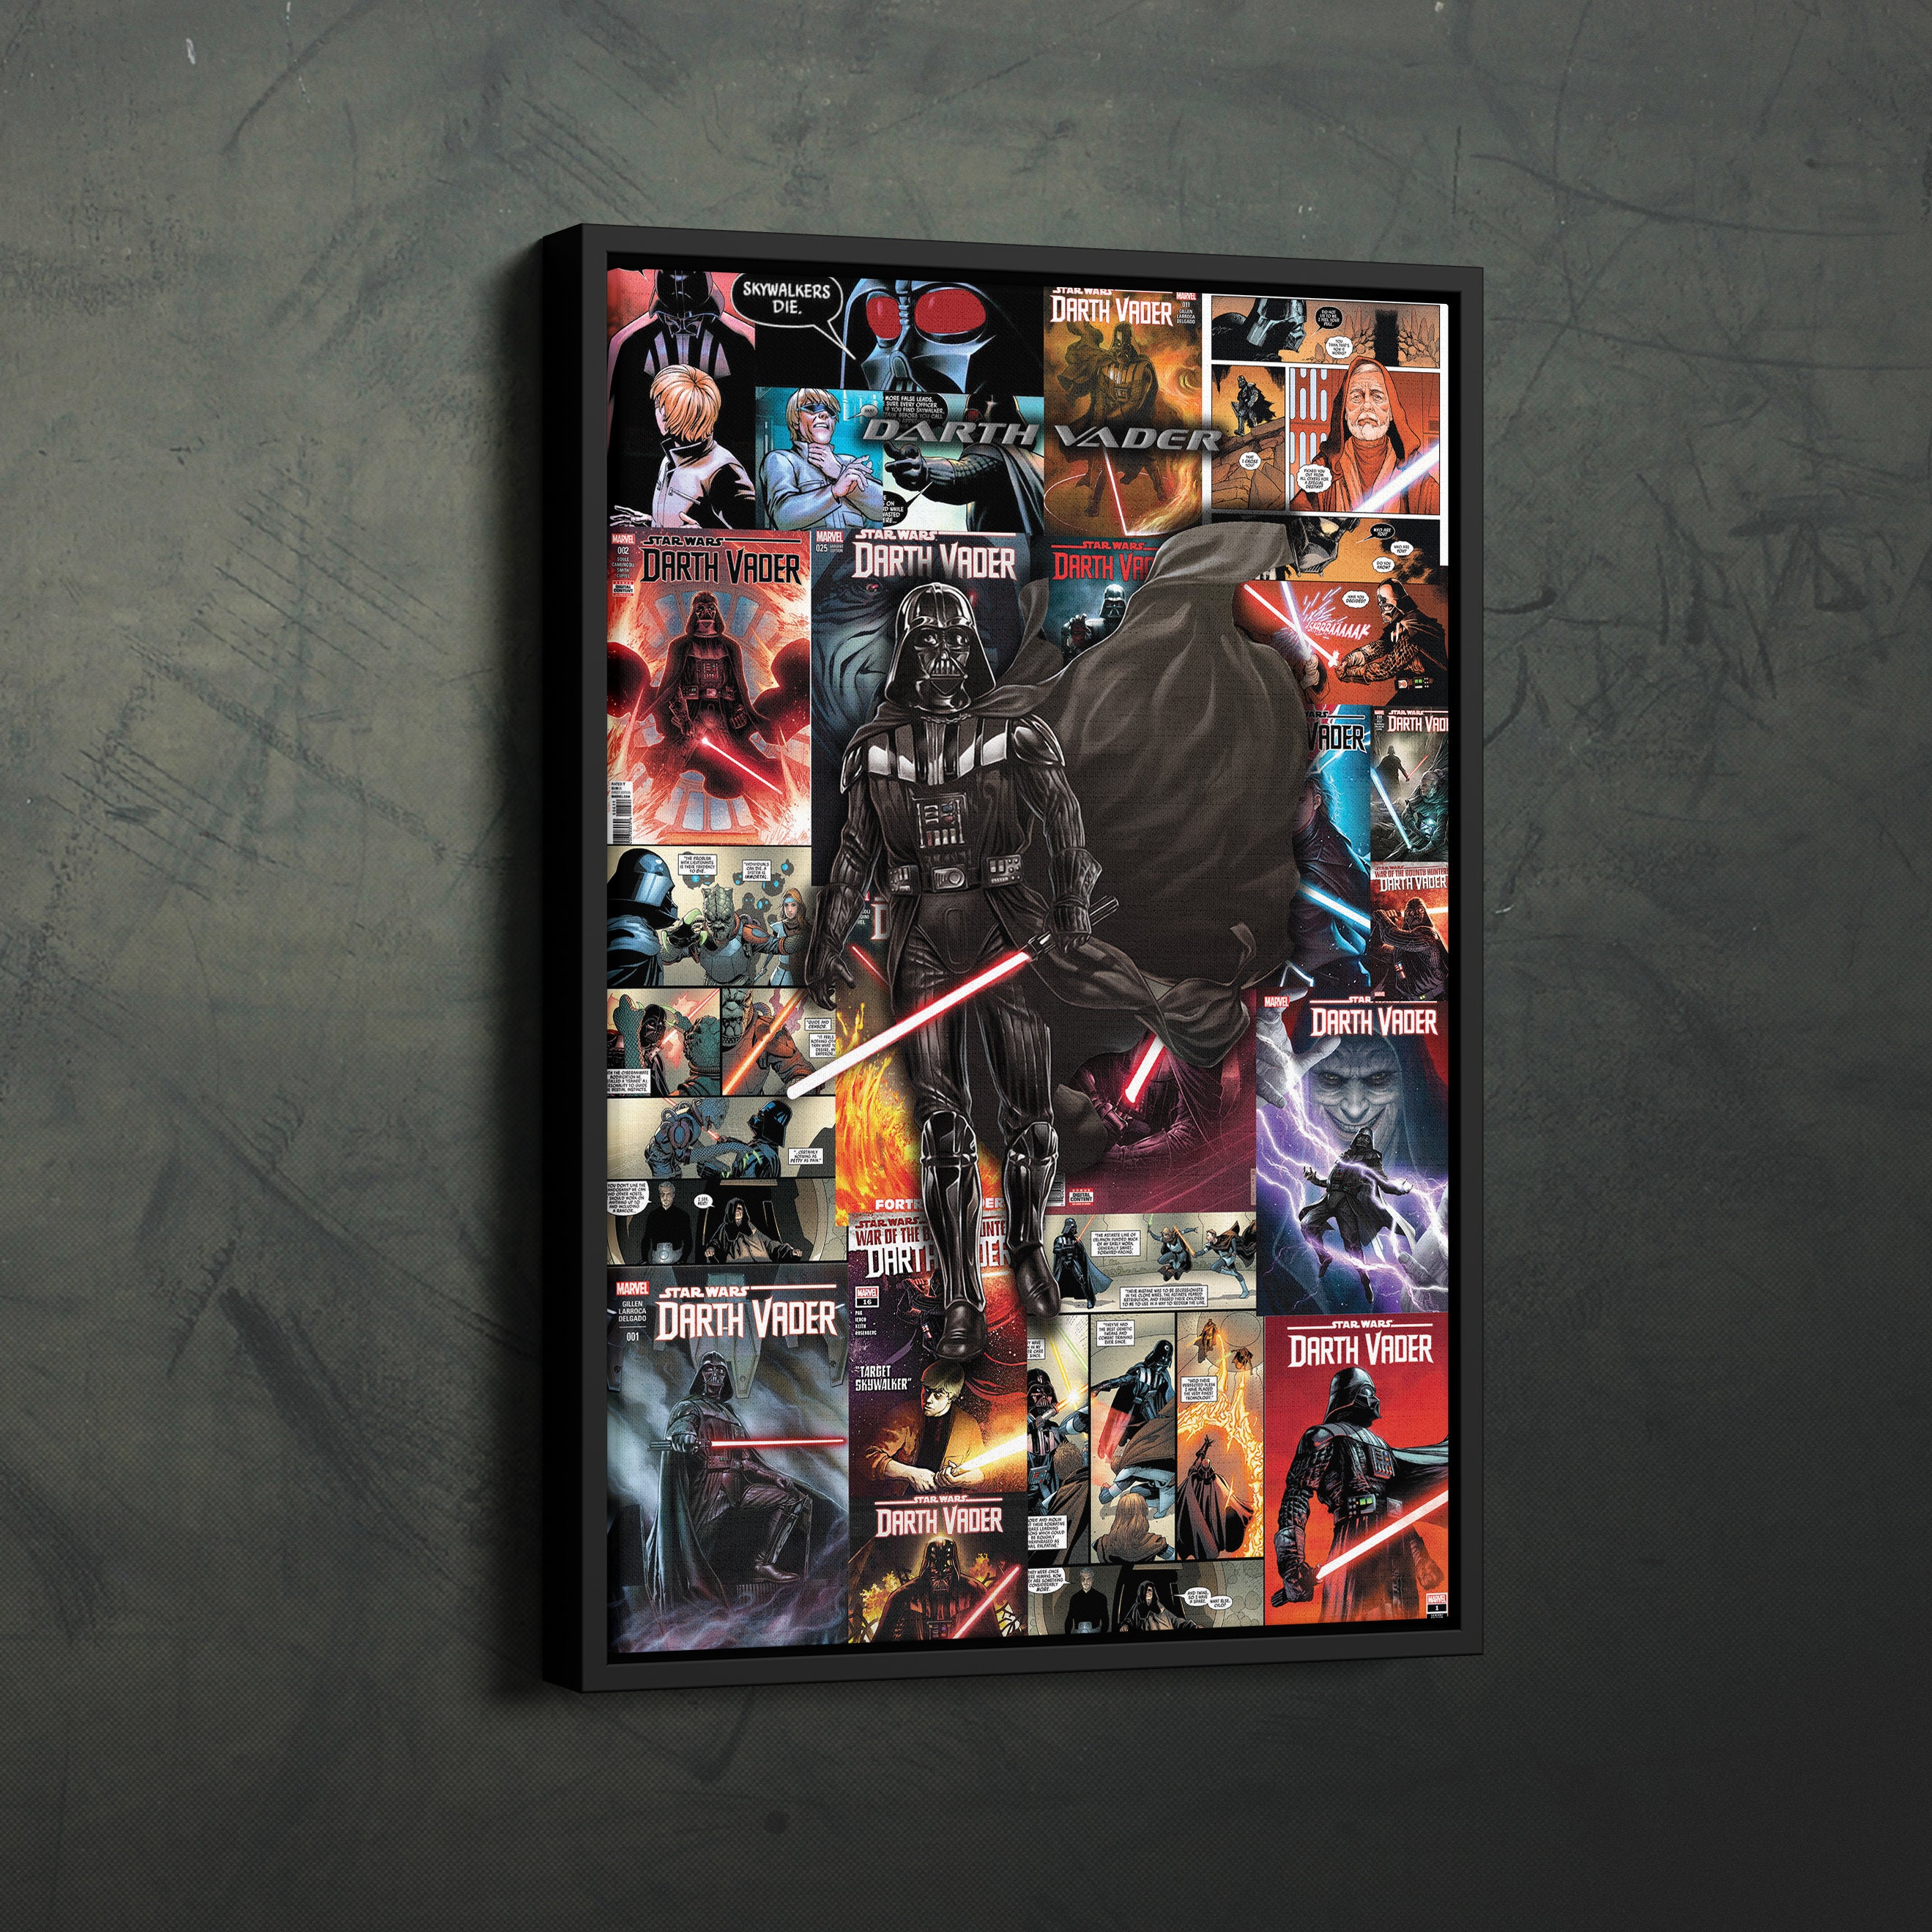 DARTH VADER Poster Collage Art Star Wars Canvas Wall Art Print Home Decor Framed Poster Art